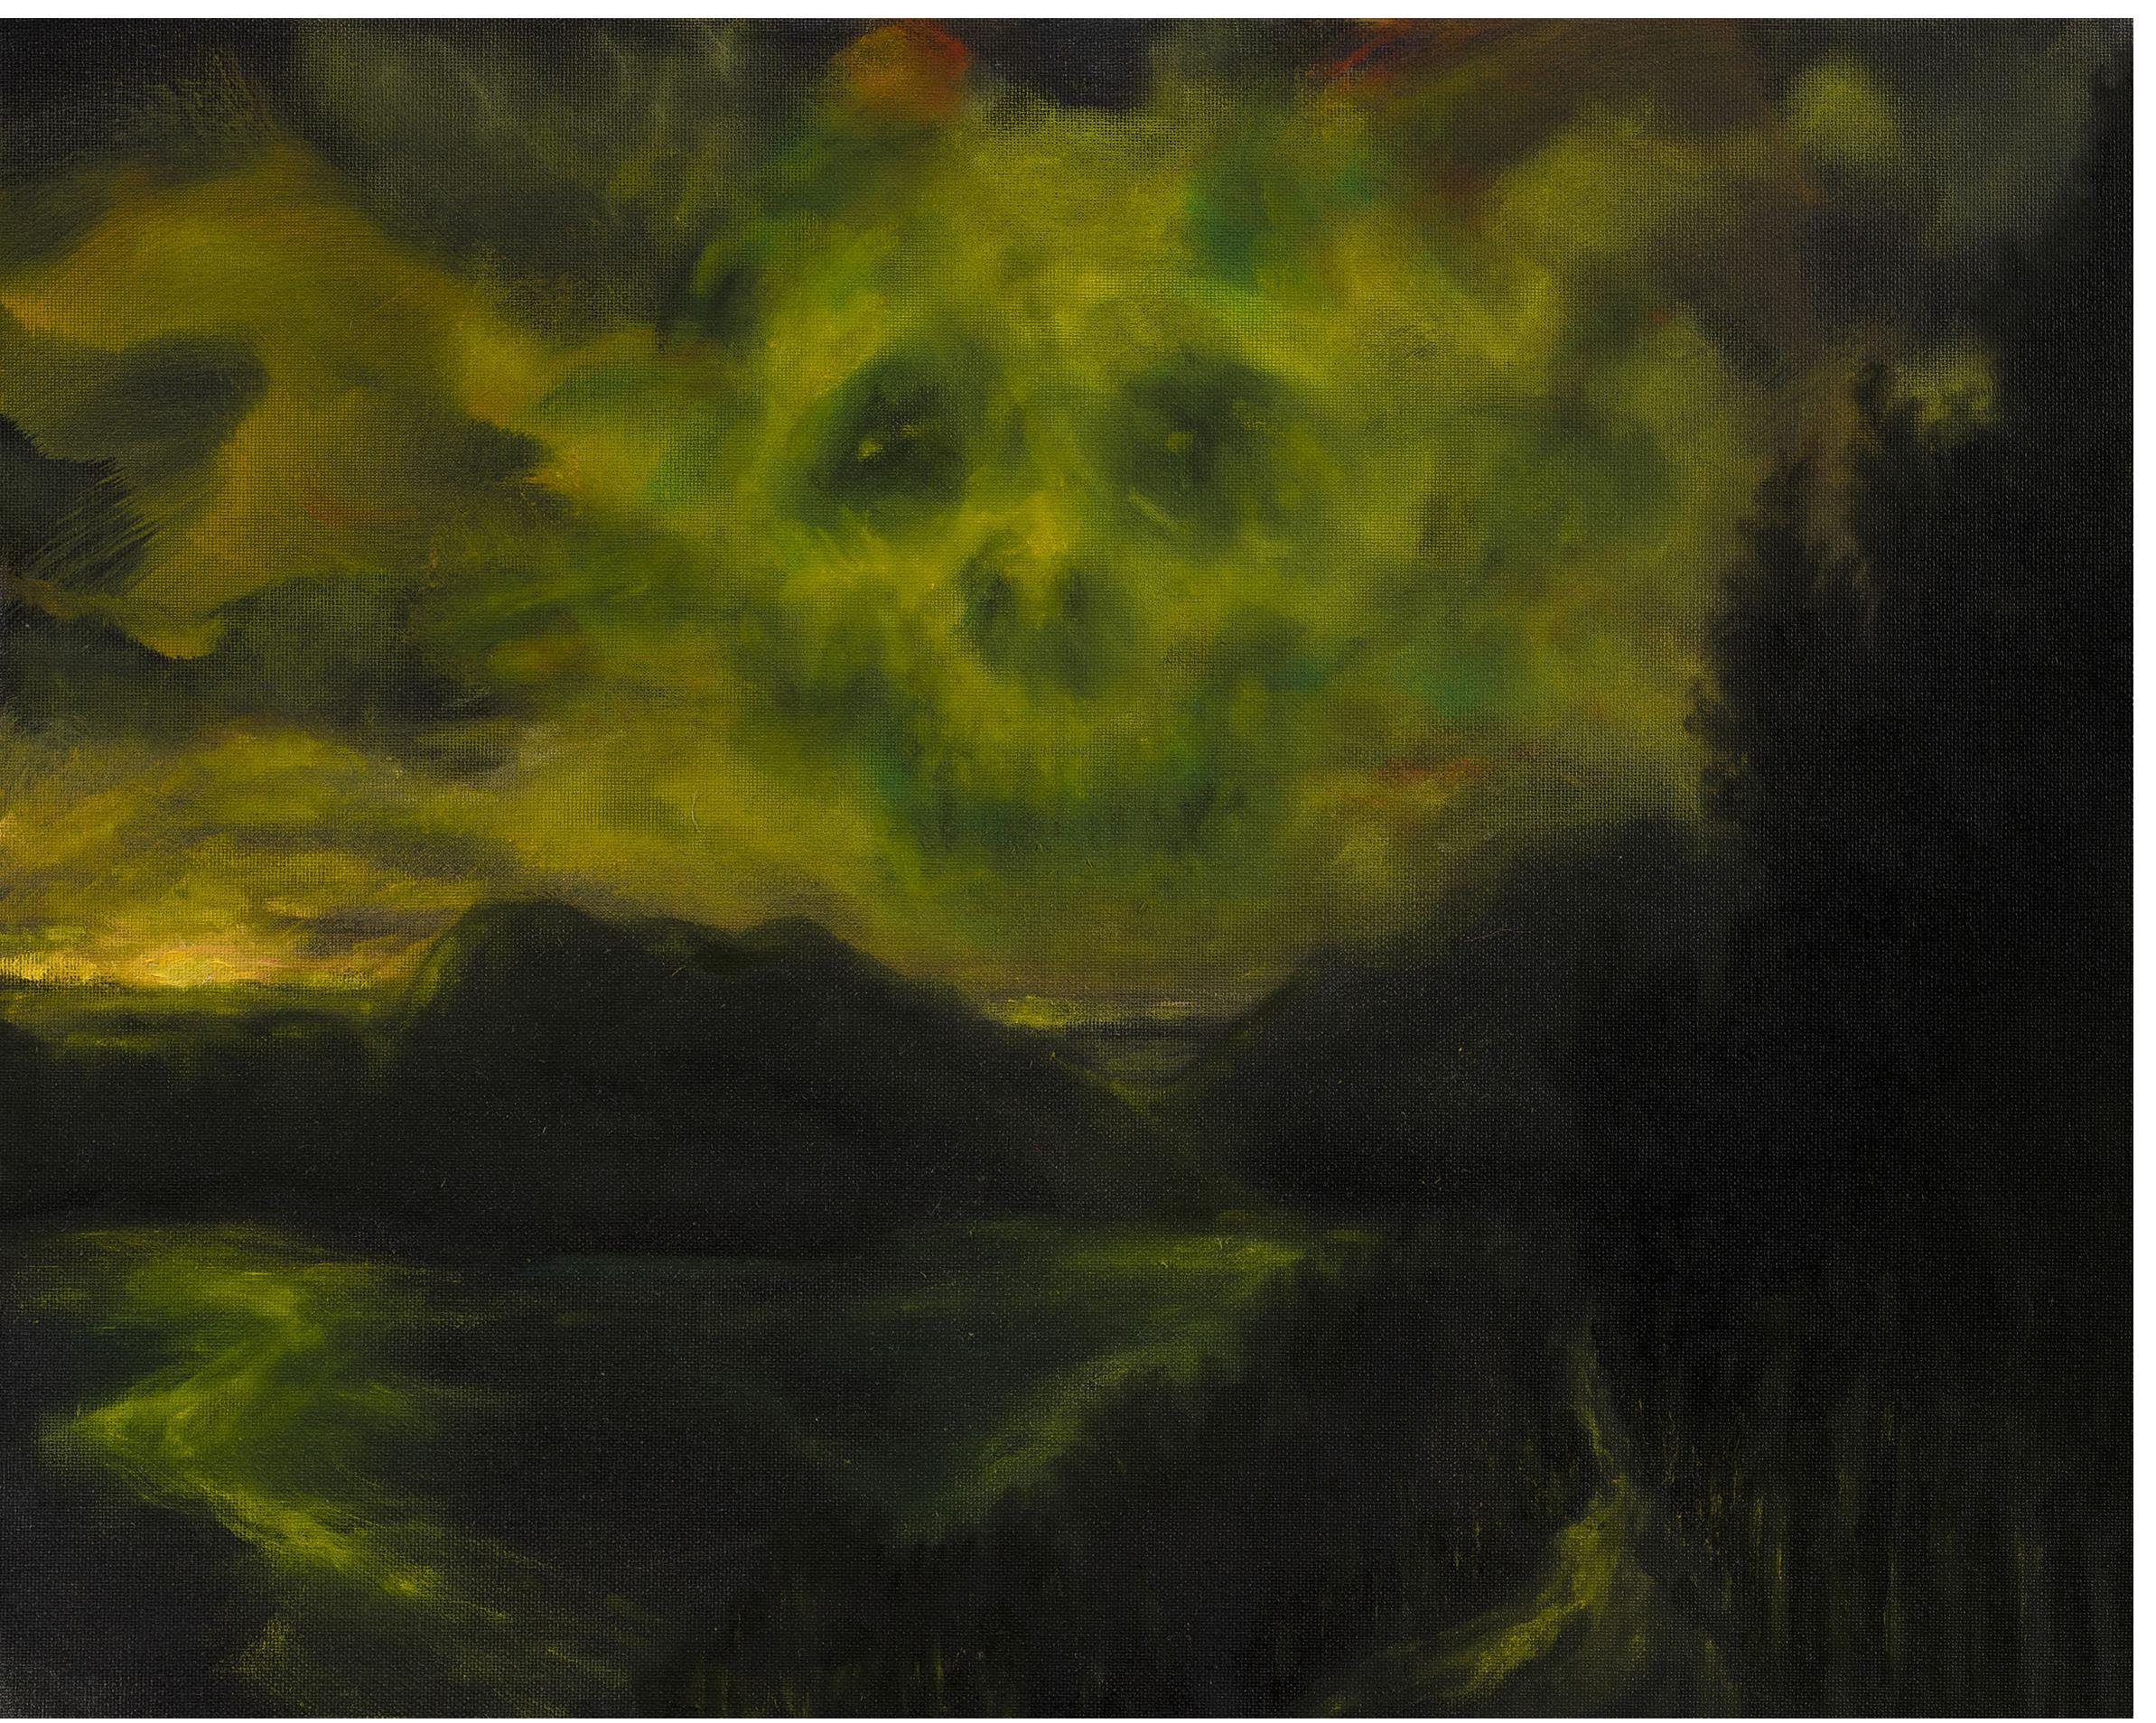 Matthew Bateson - "Halloween Landscape", oil on canvas board, 40 x 50 cm